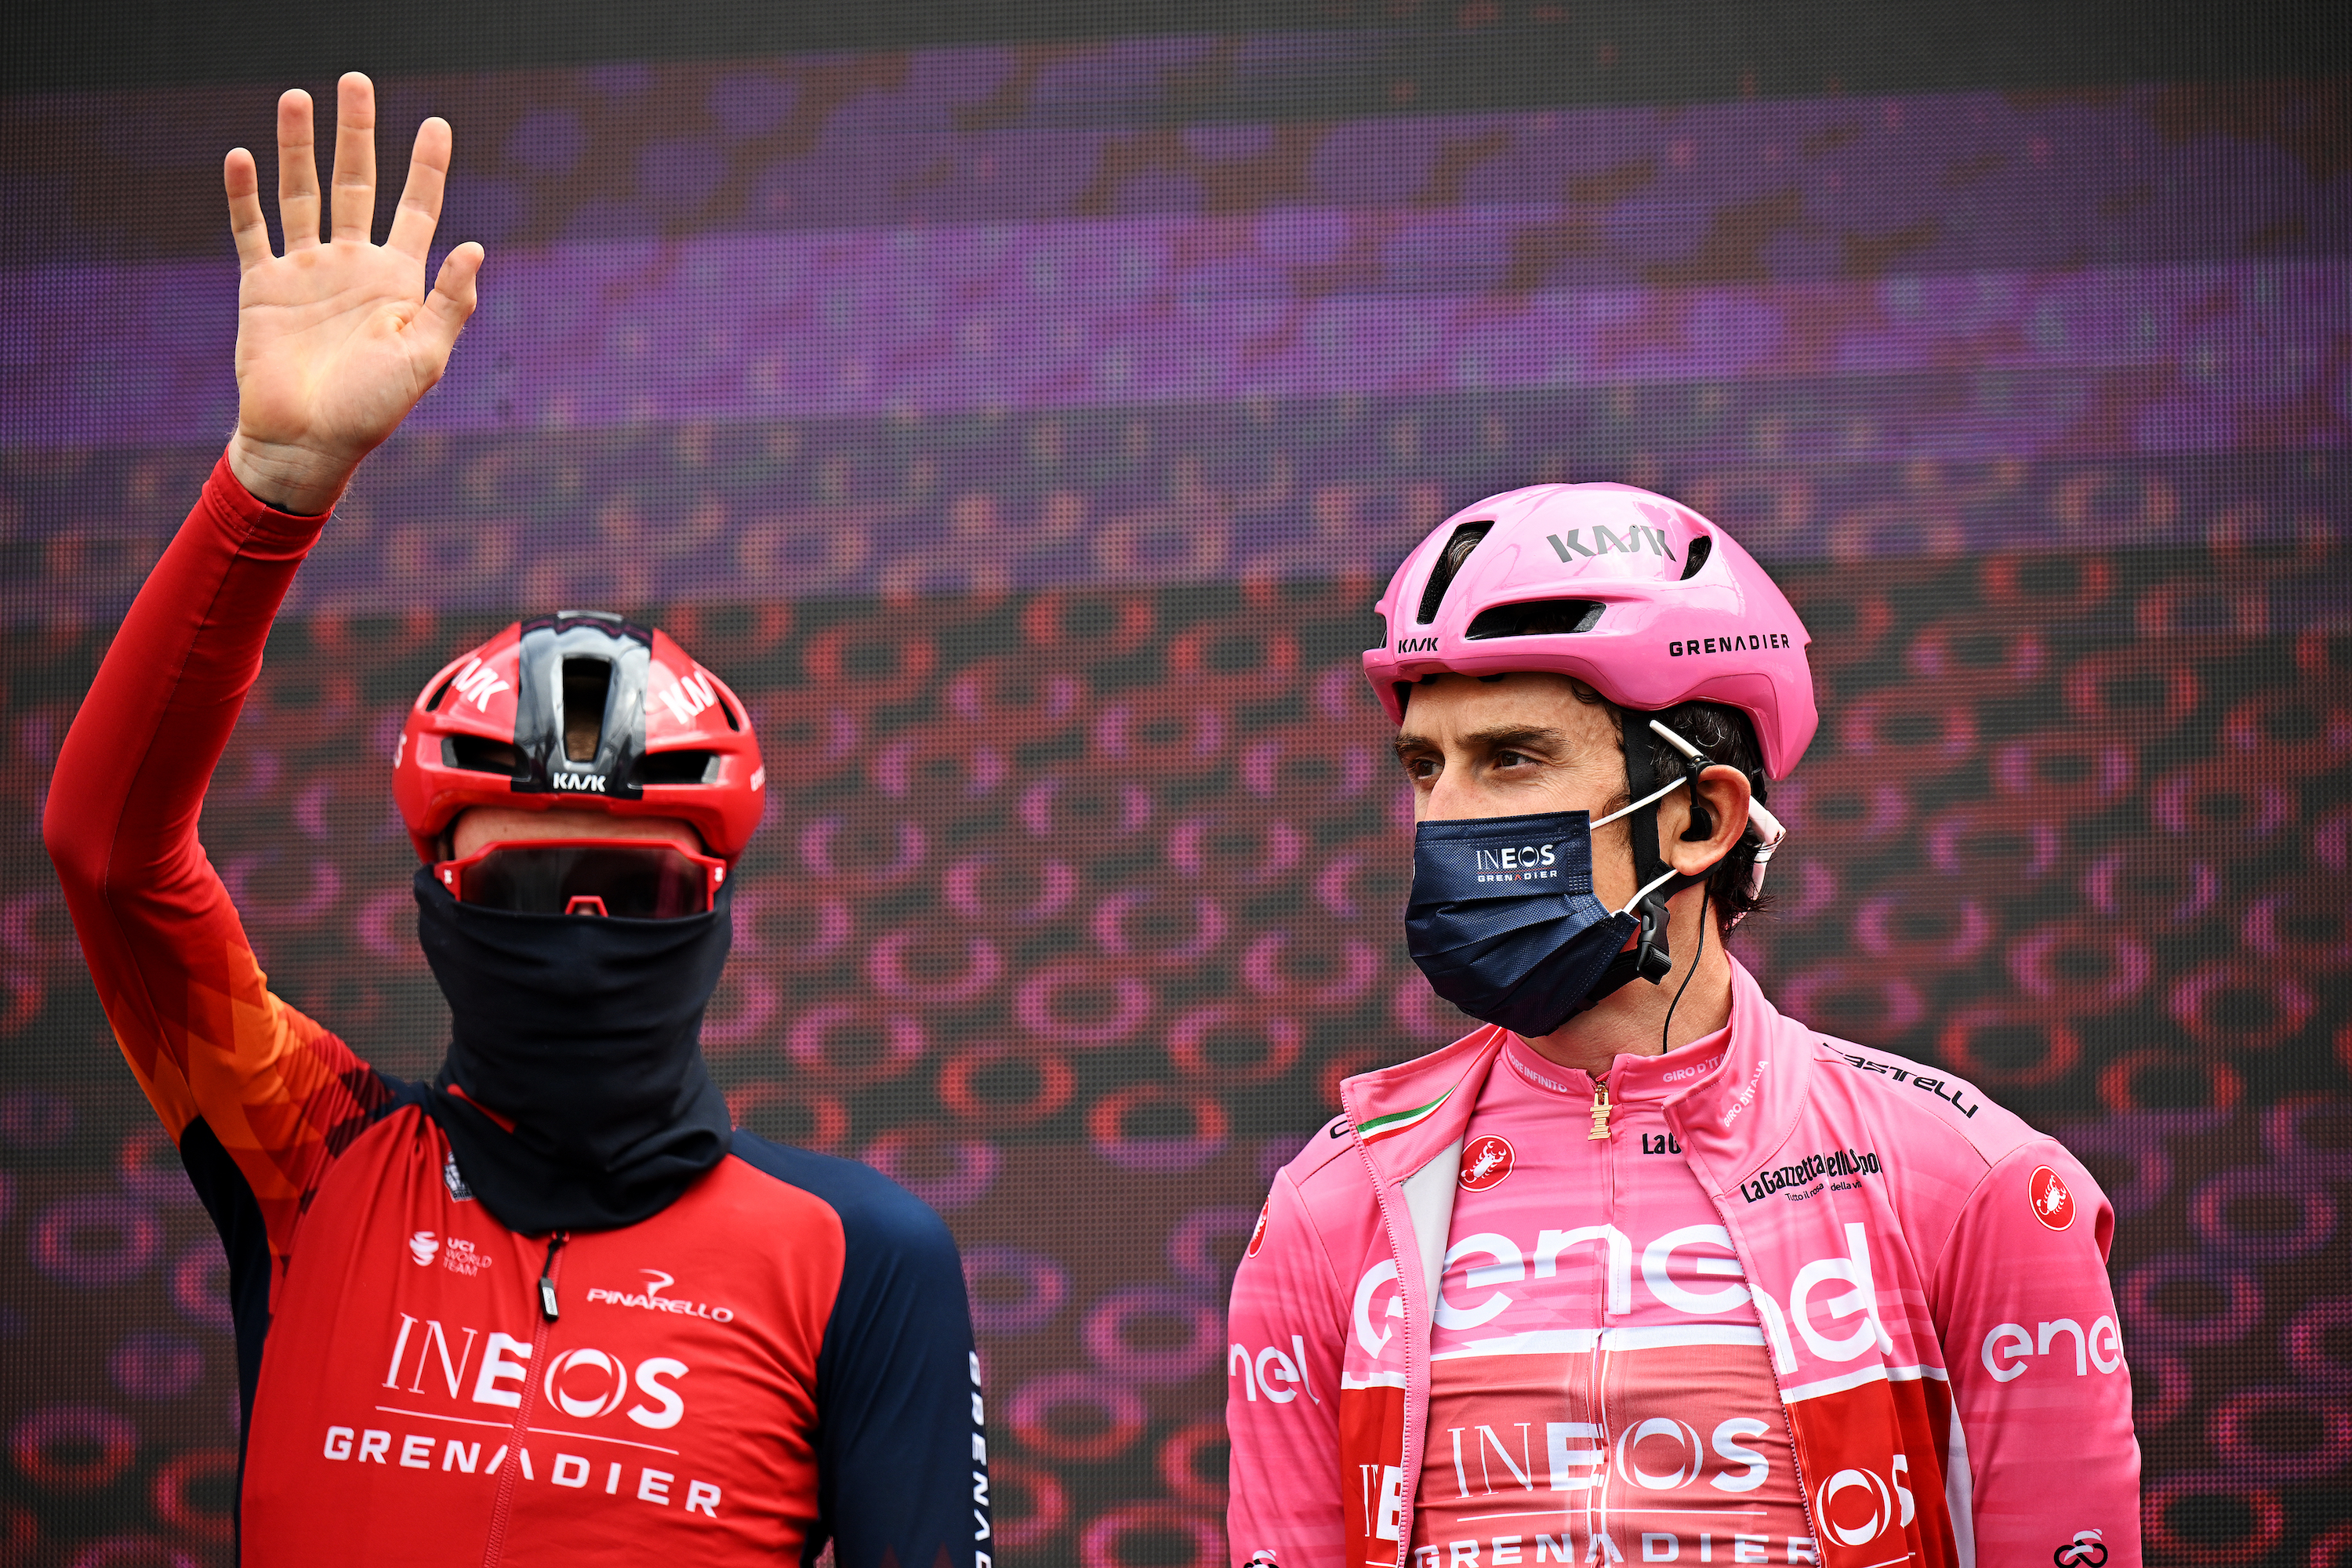 Geraint Thomas at the Giro d'Italia